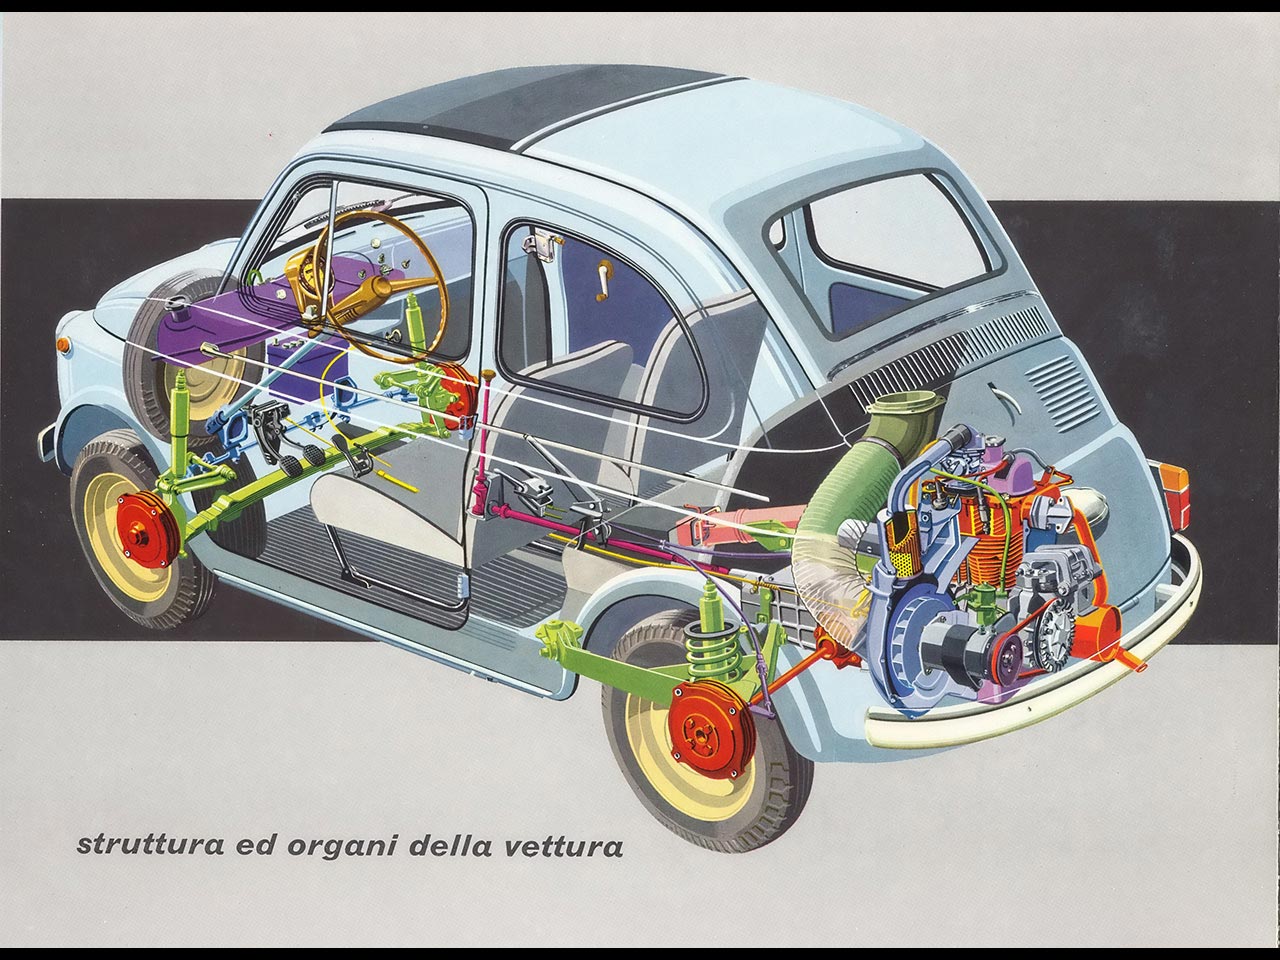 Fiat 500 cutaway